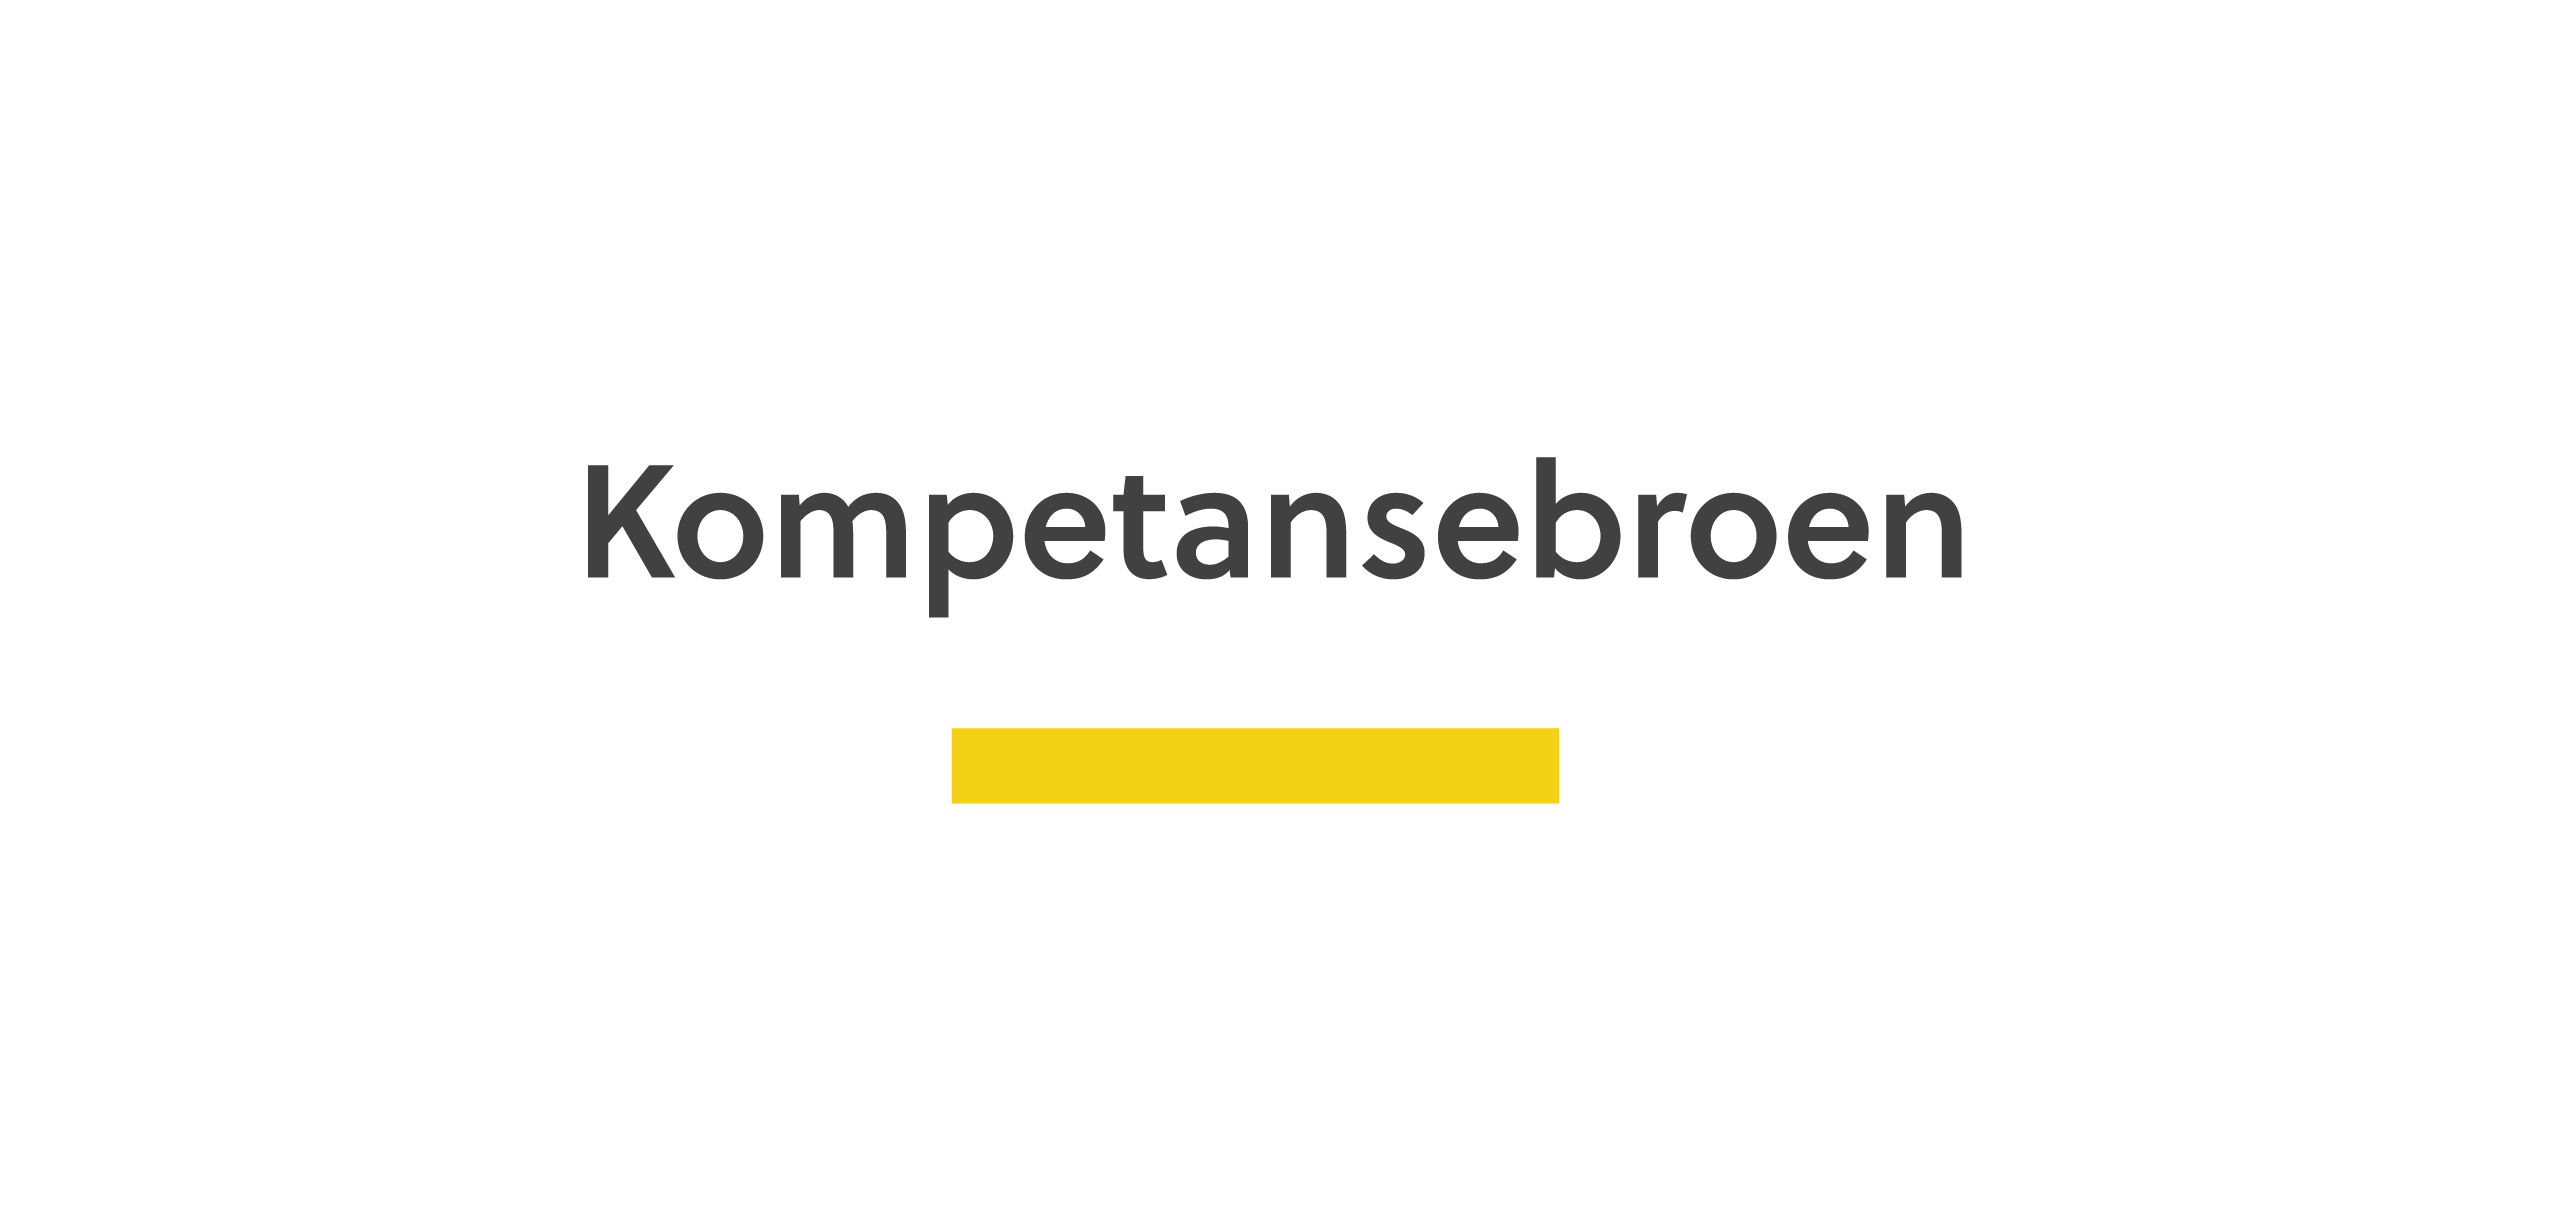 Kompetansebroen logo